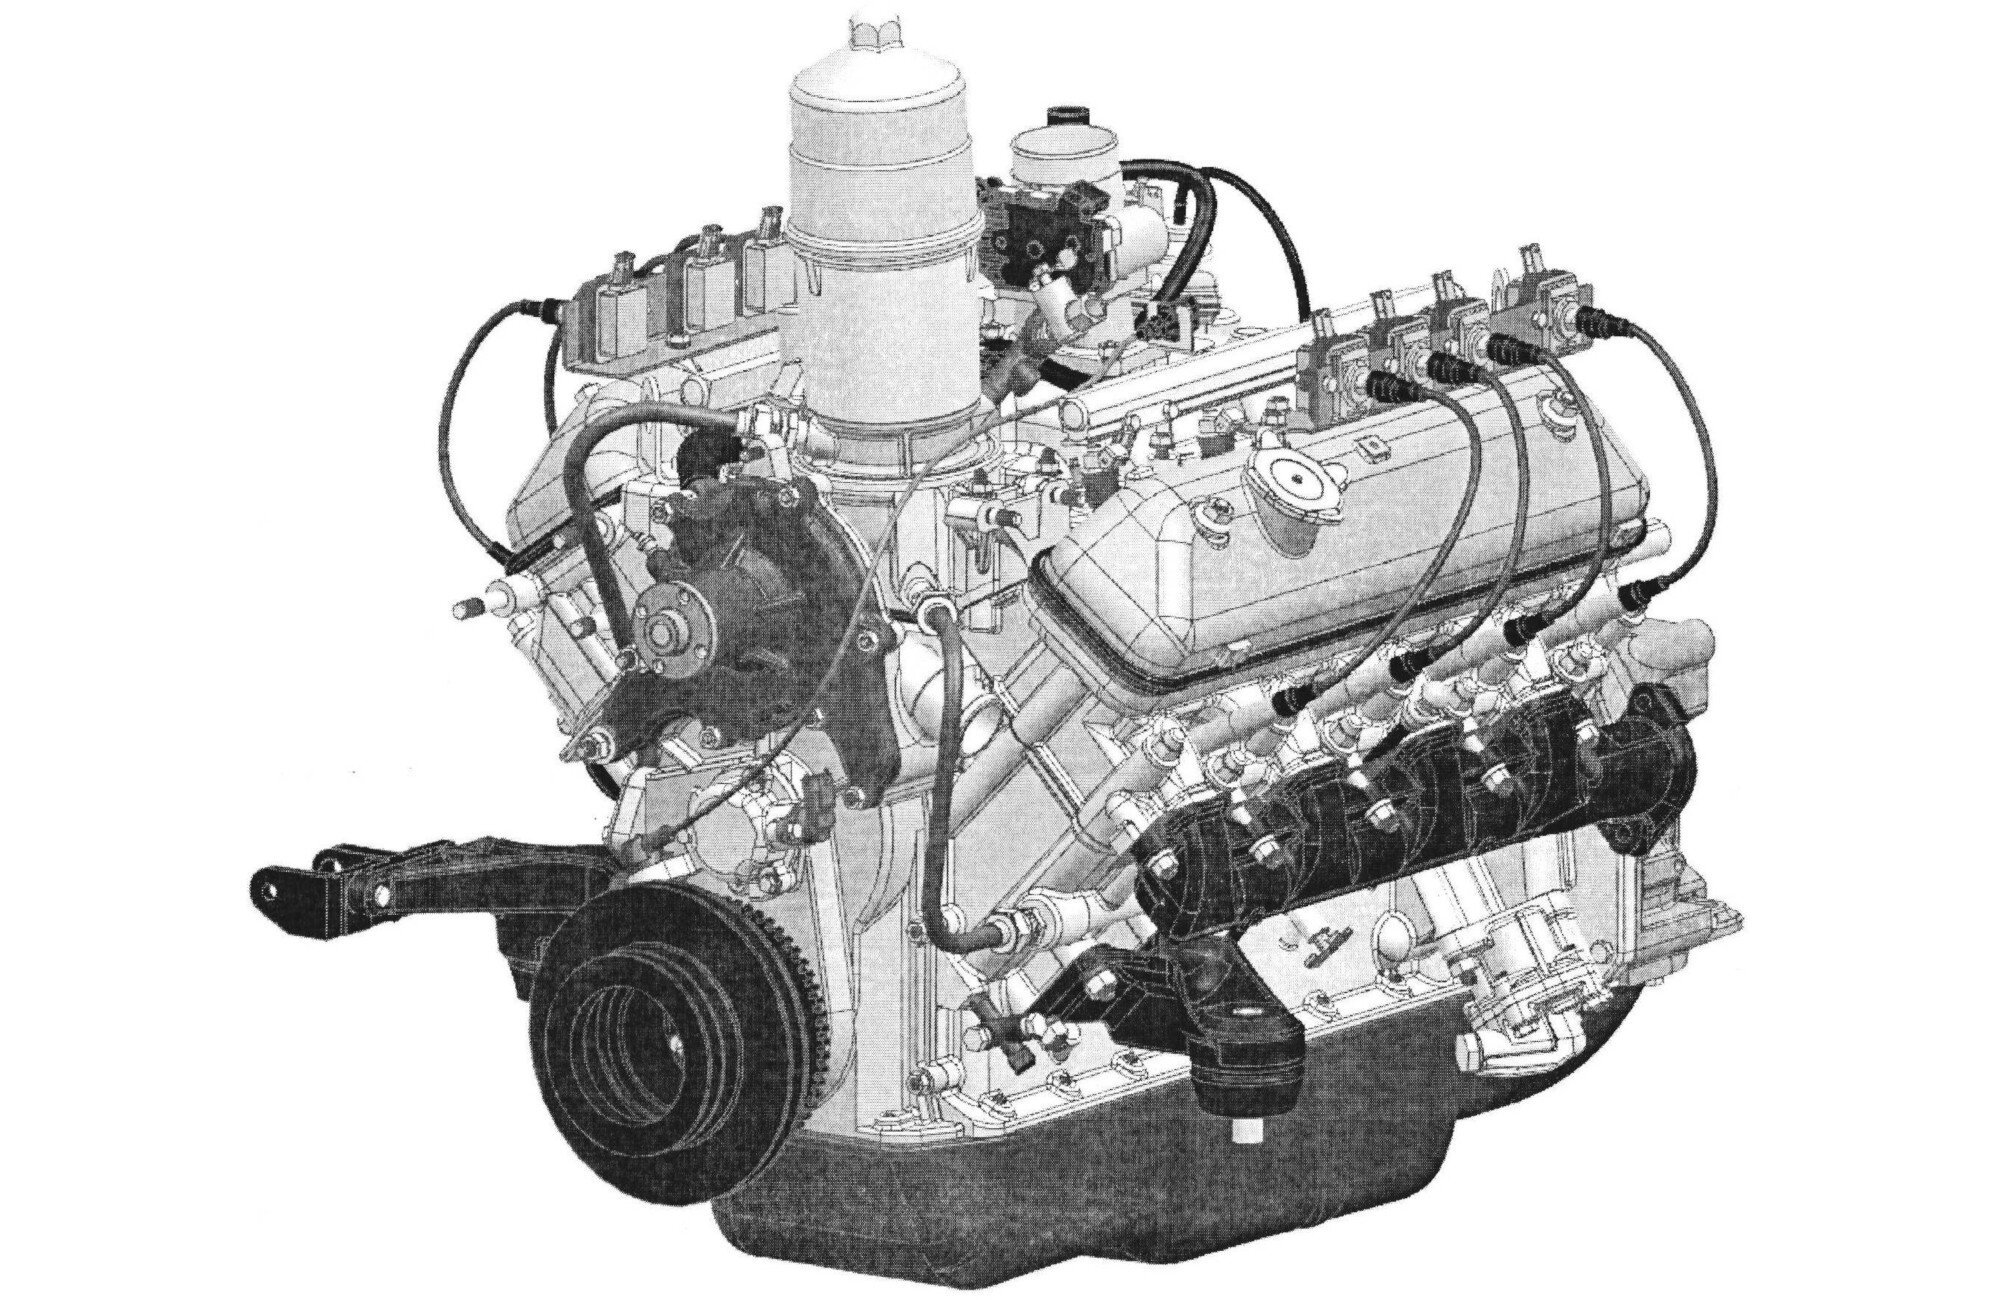 ЗМЗ снимает легендарный мотор ЗМЗ V8 с производства